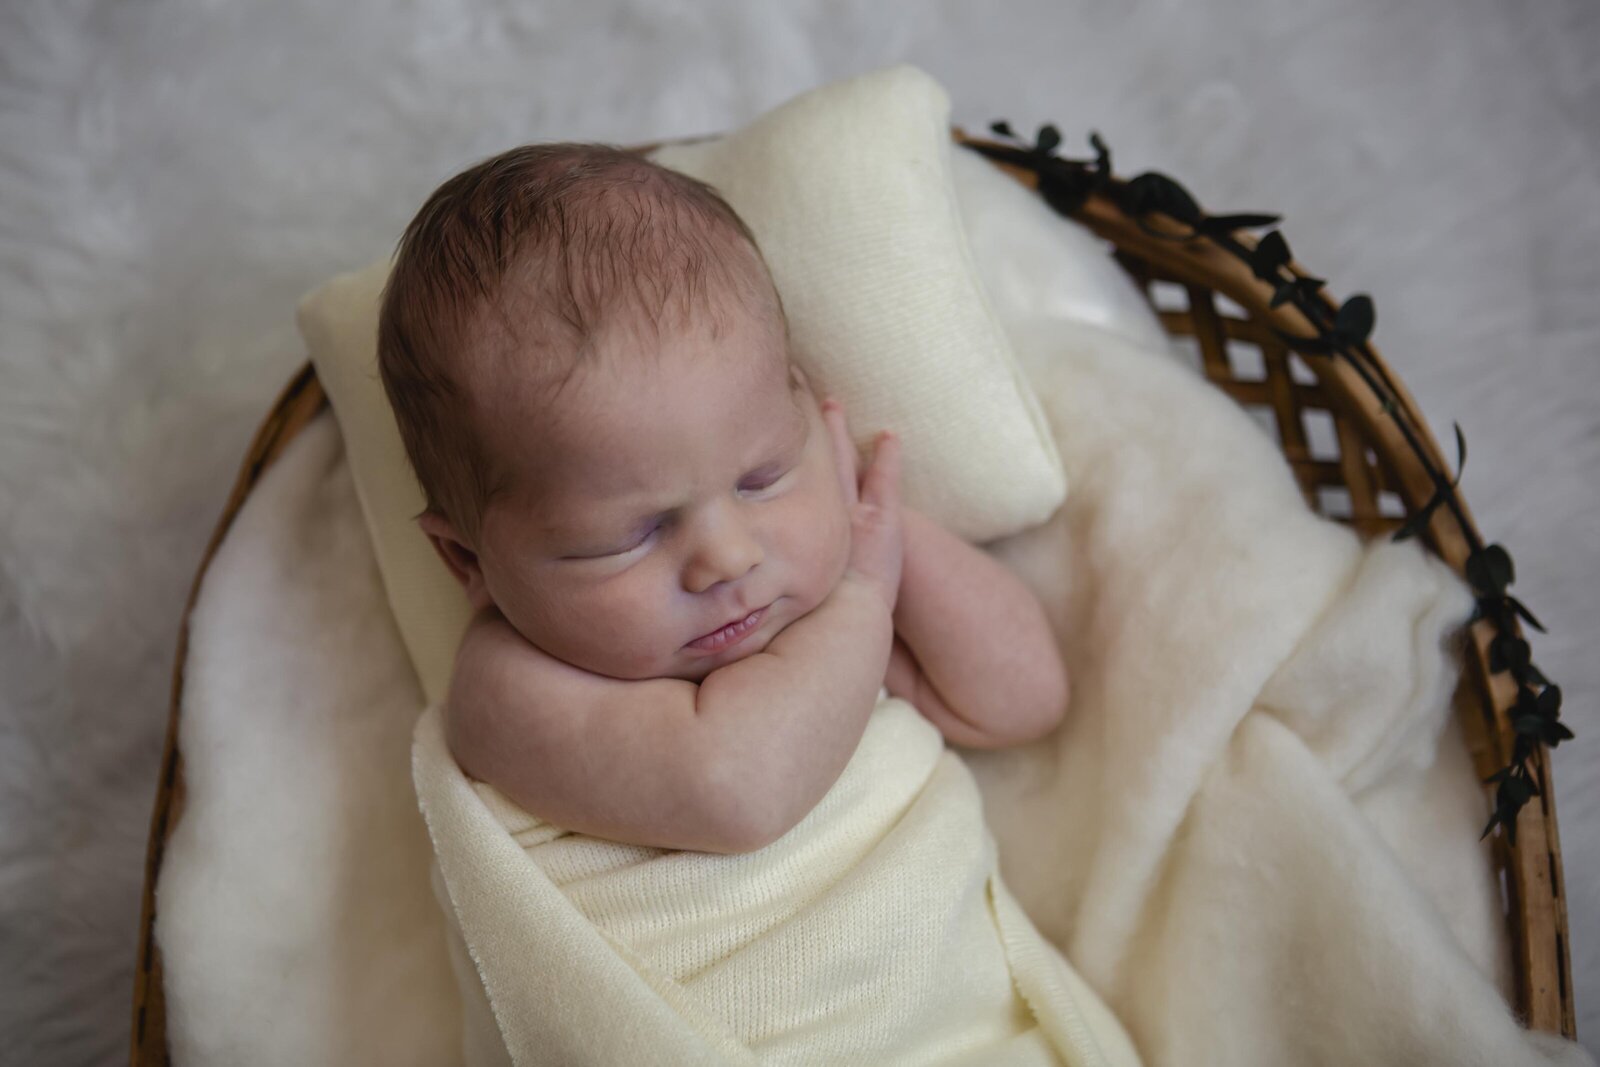 newborn photography atlanta ga